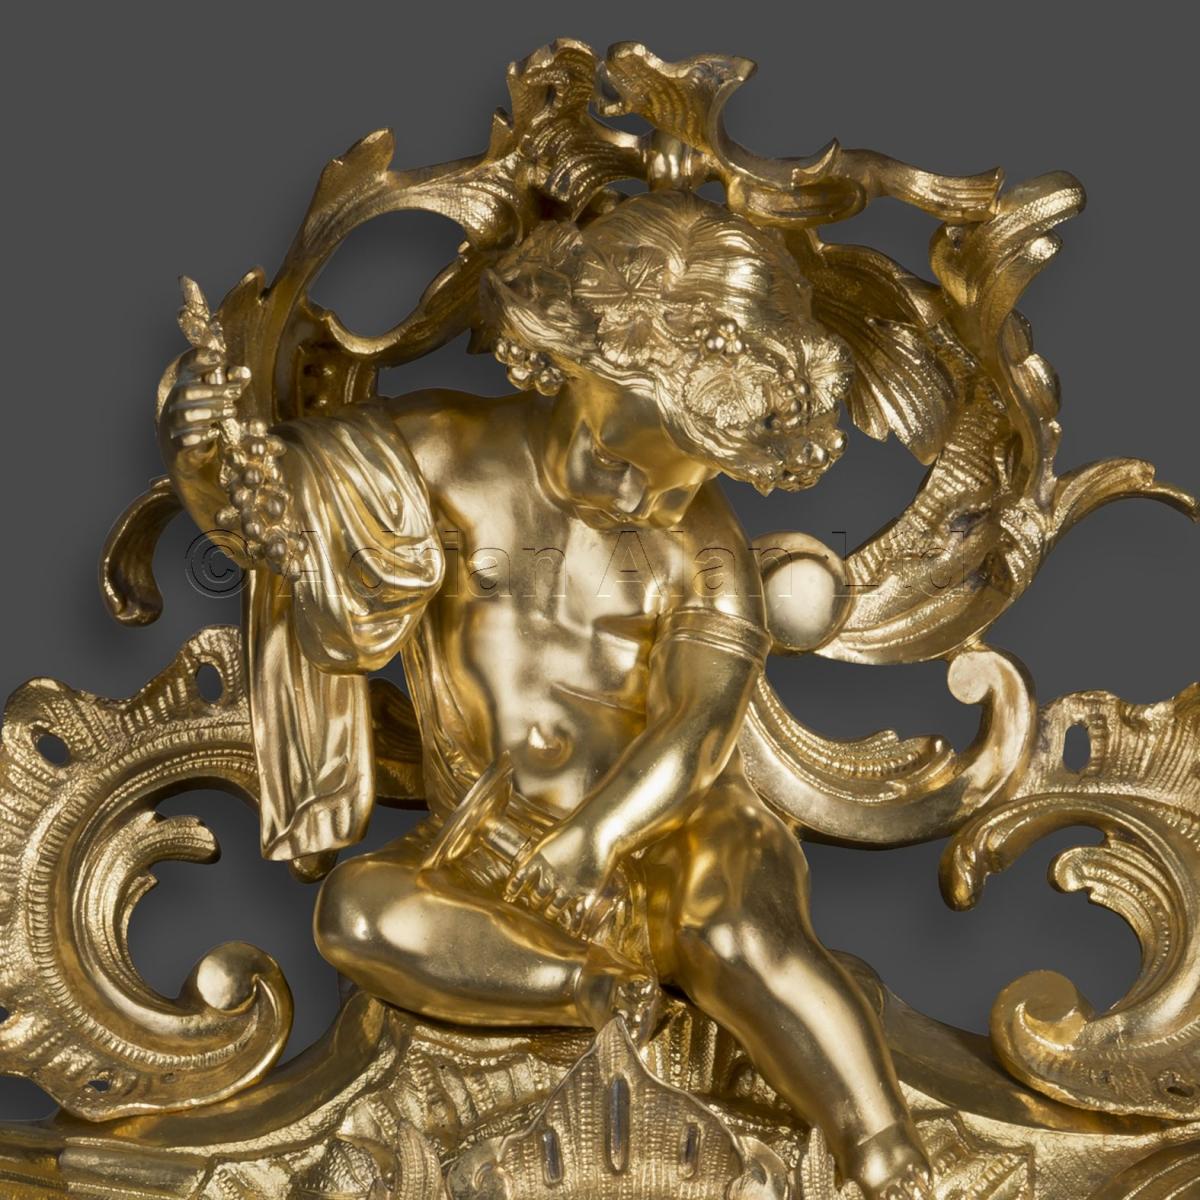 An Elaborate Louis XV Style Gilt-Bronze Cartel Clock